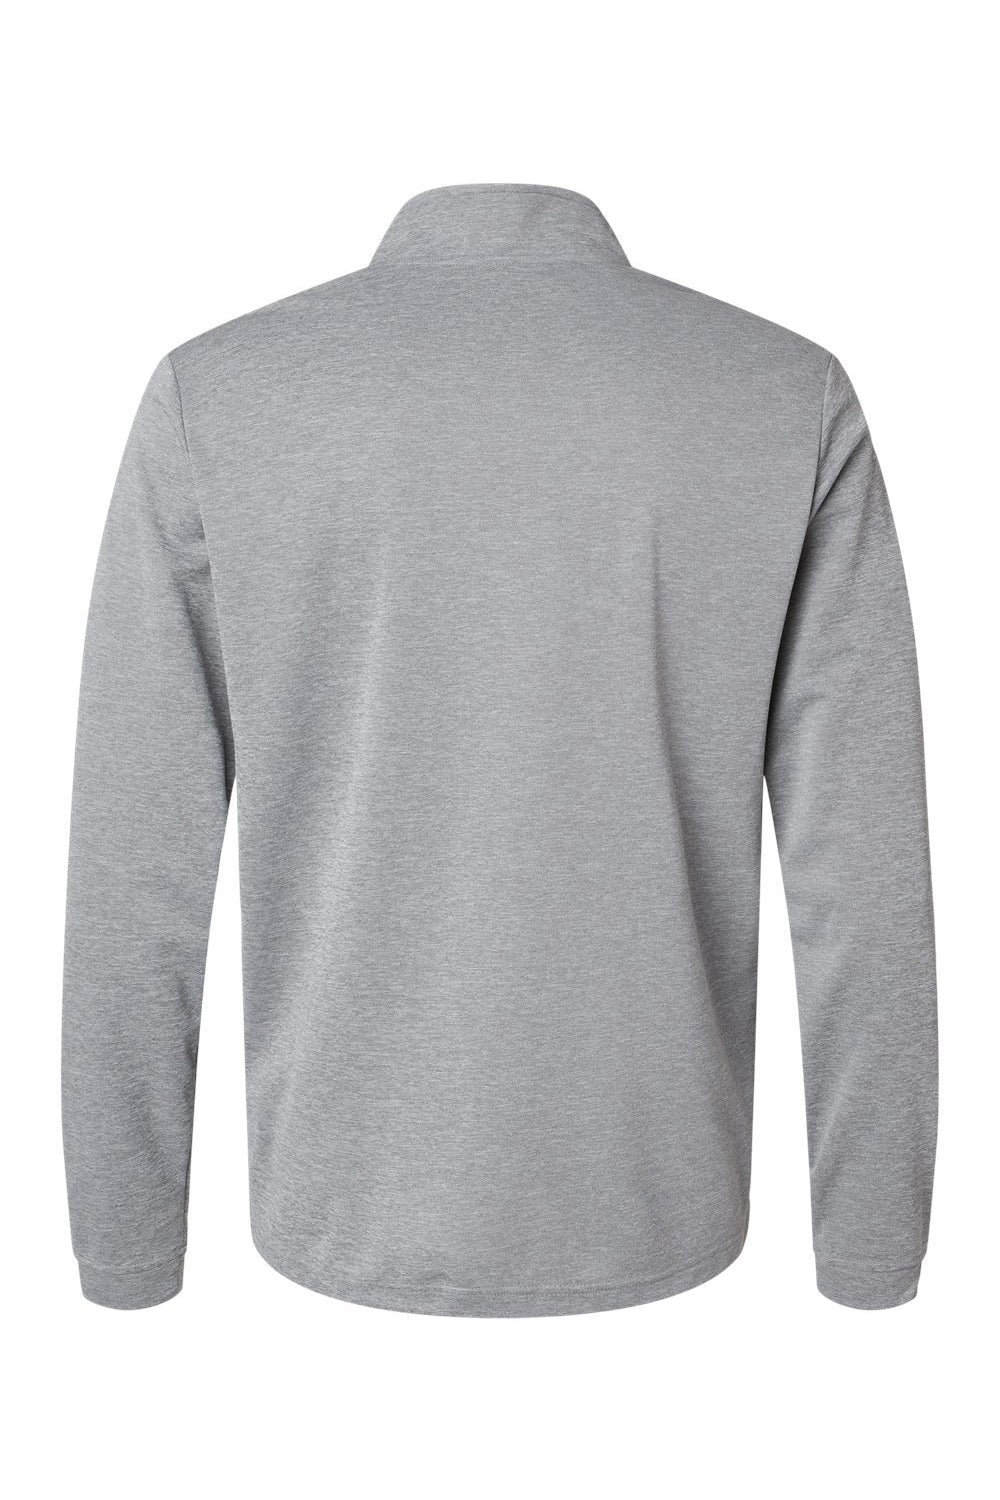 Adidas A401 Mens UPF 50+ 1/4 Zip Sweatshirt Grey Melange Flat Back